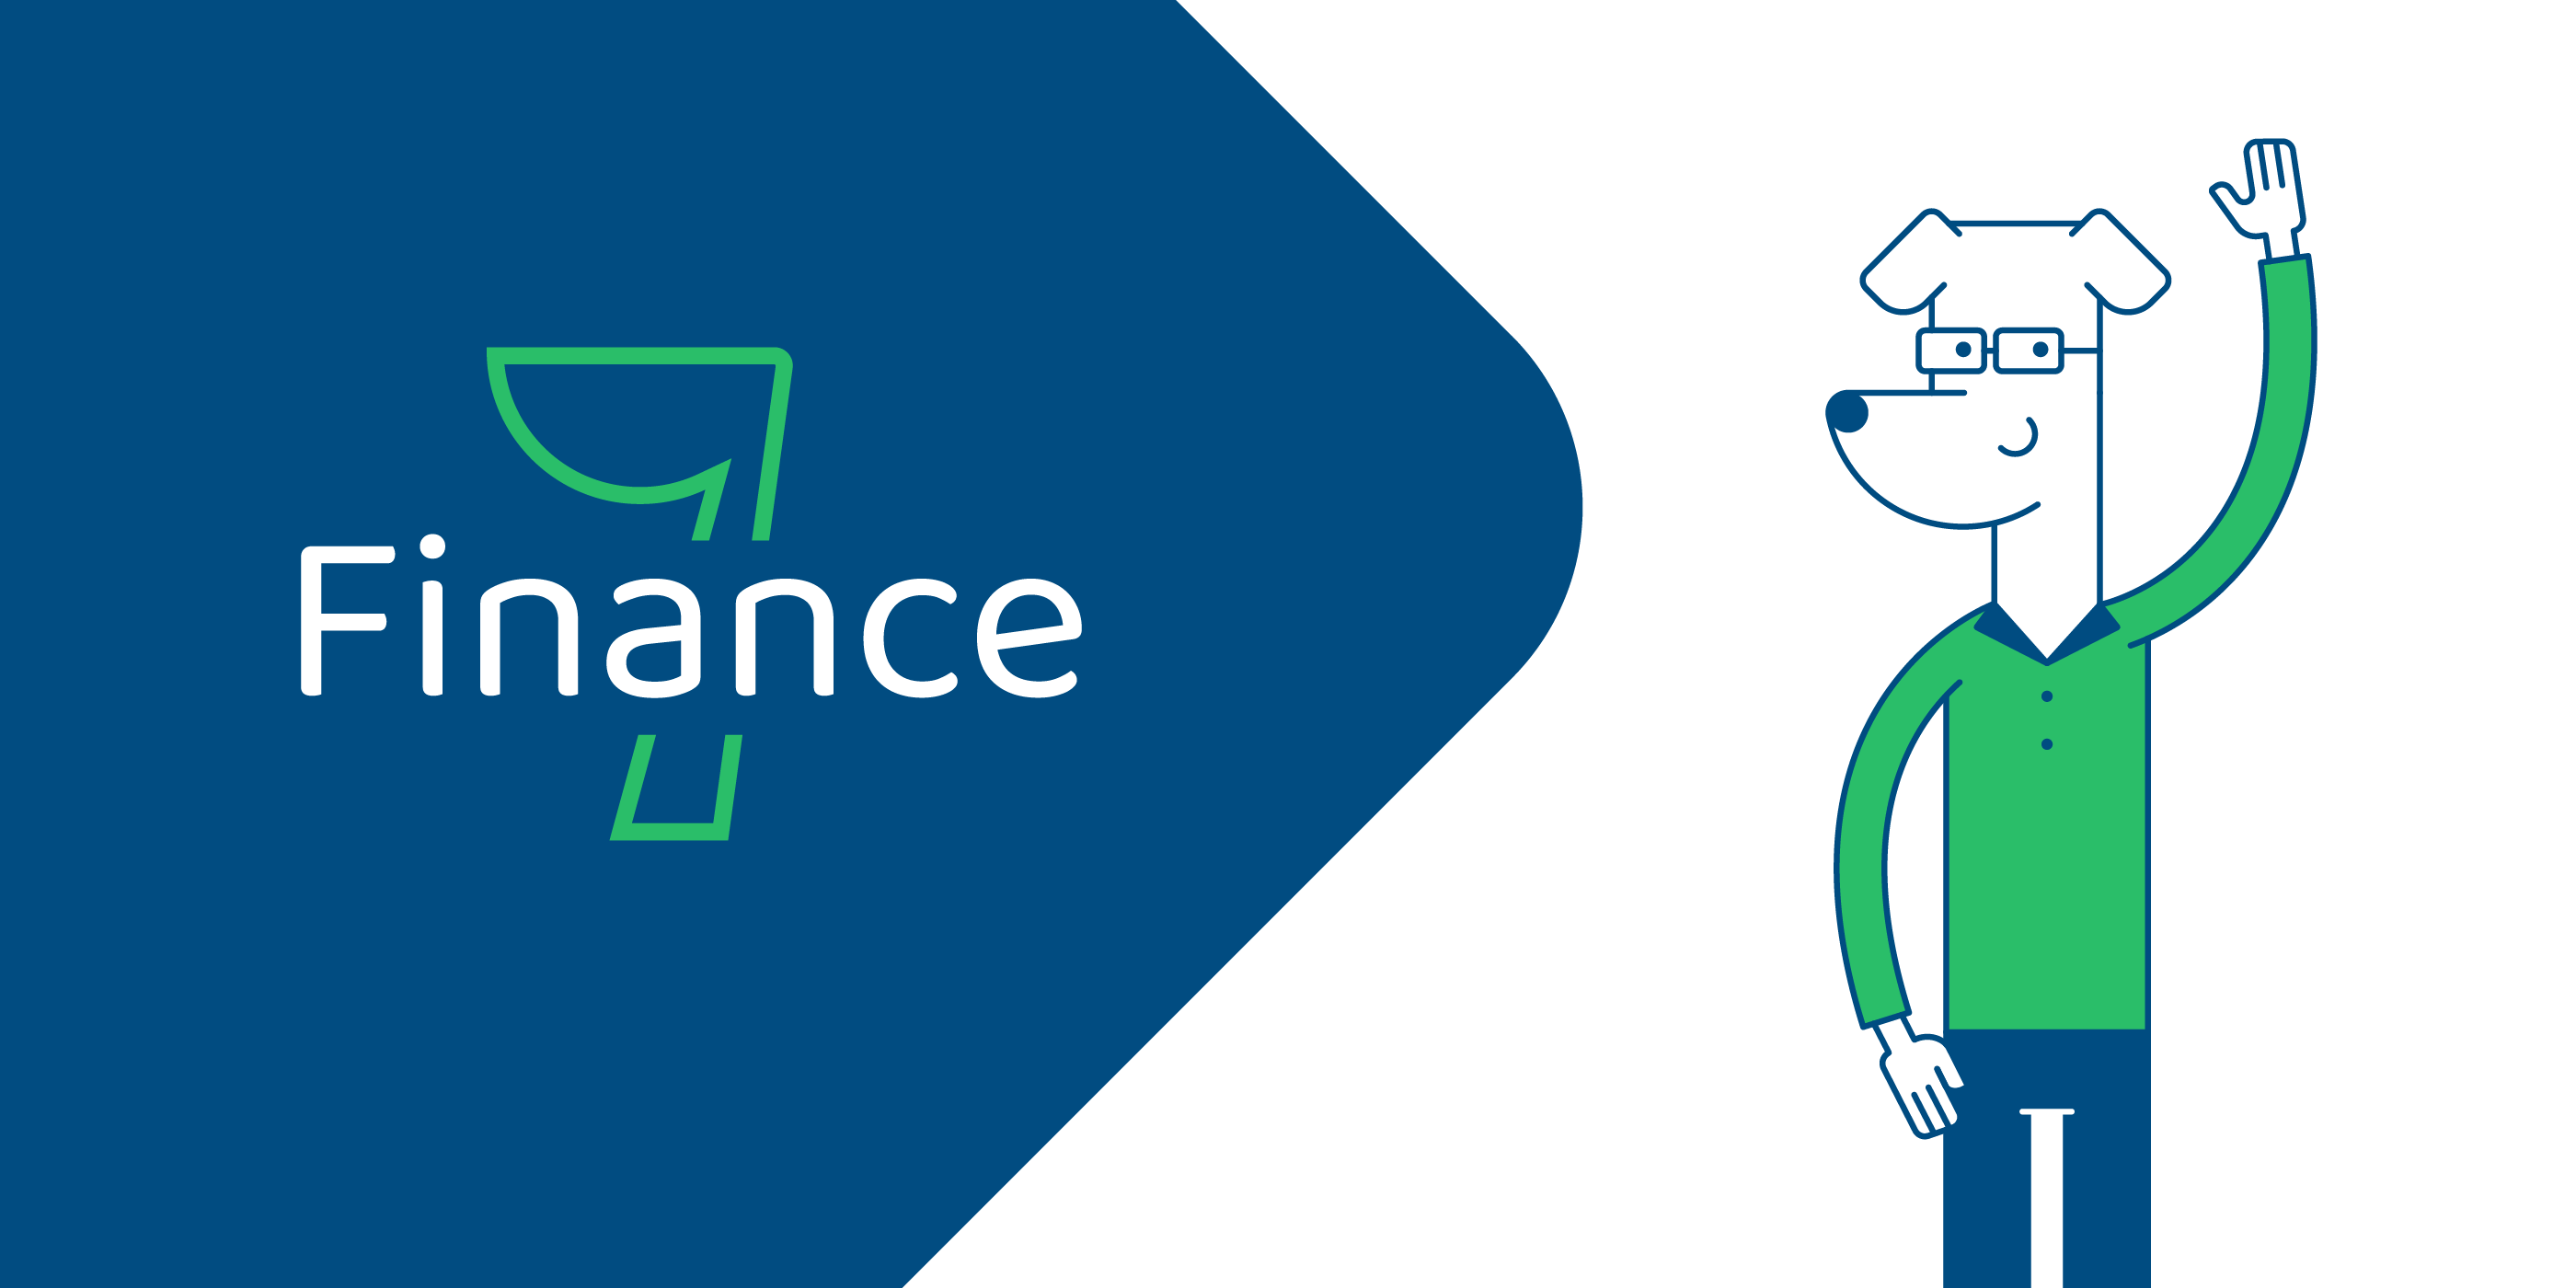 7Finance logo a maskot